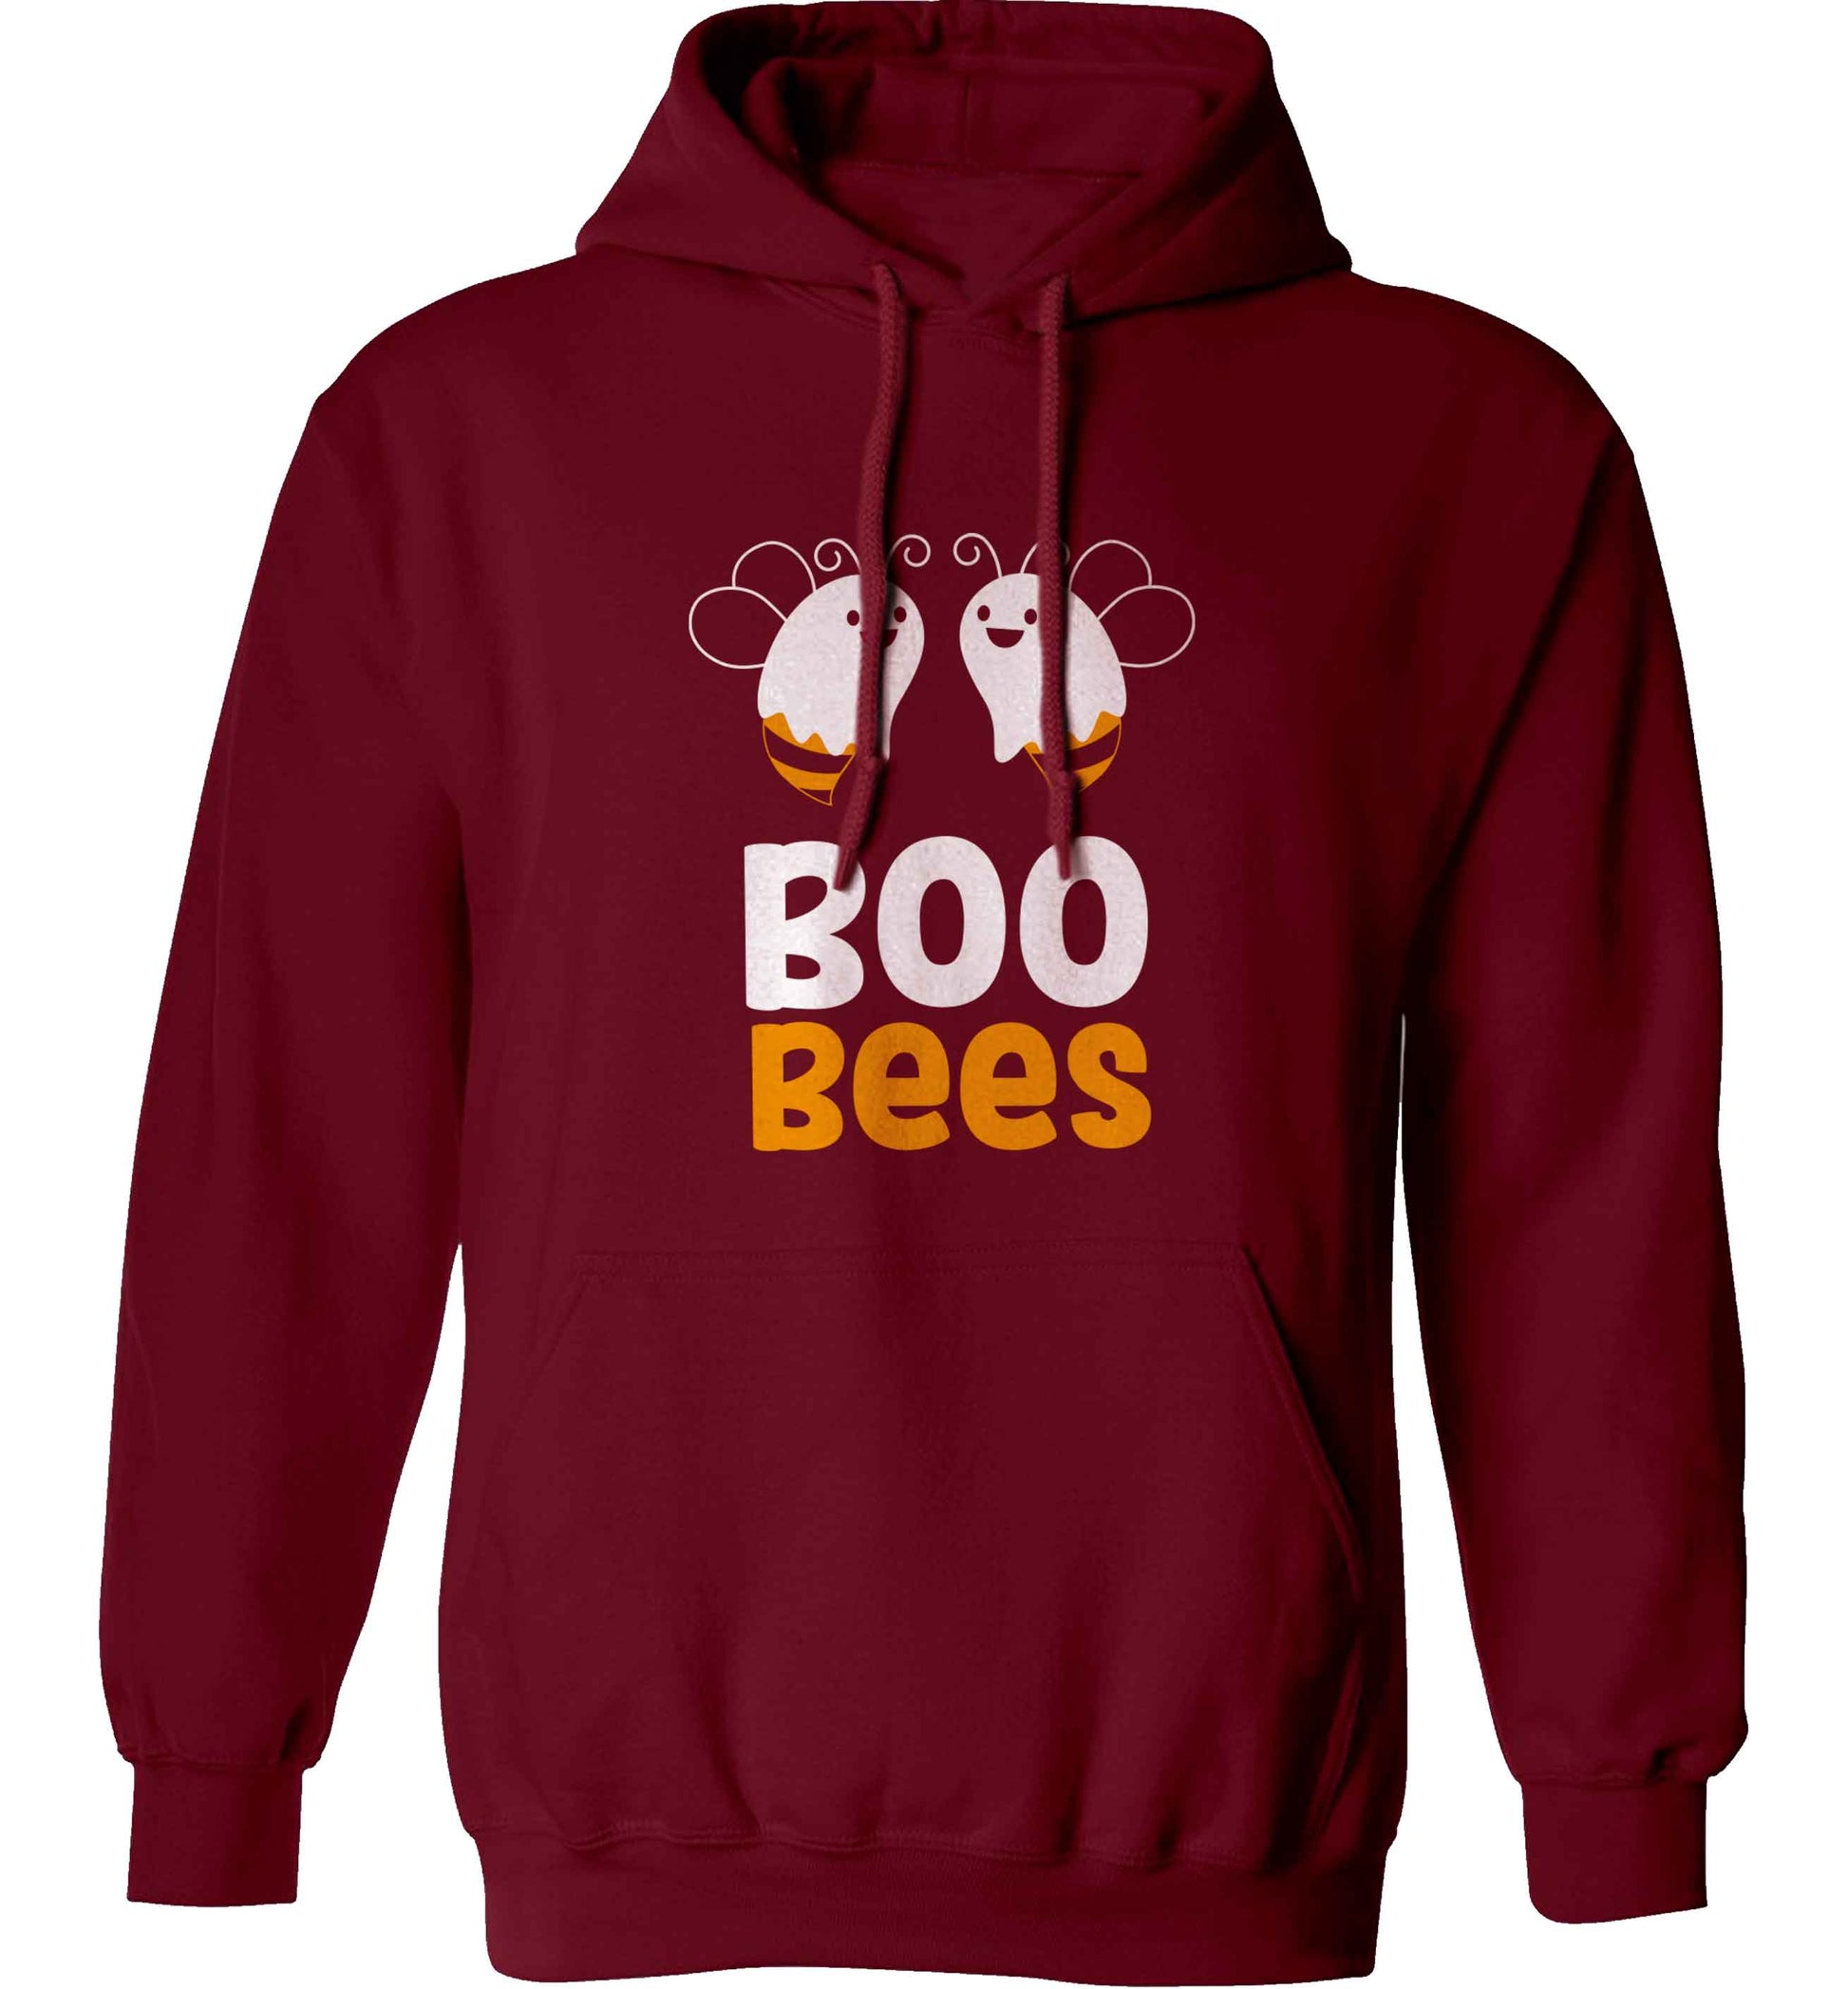 Boo bees Kit adults unisex maroon hoodie 2XL